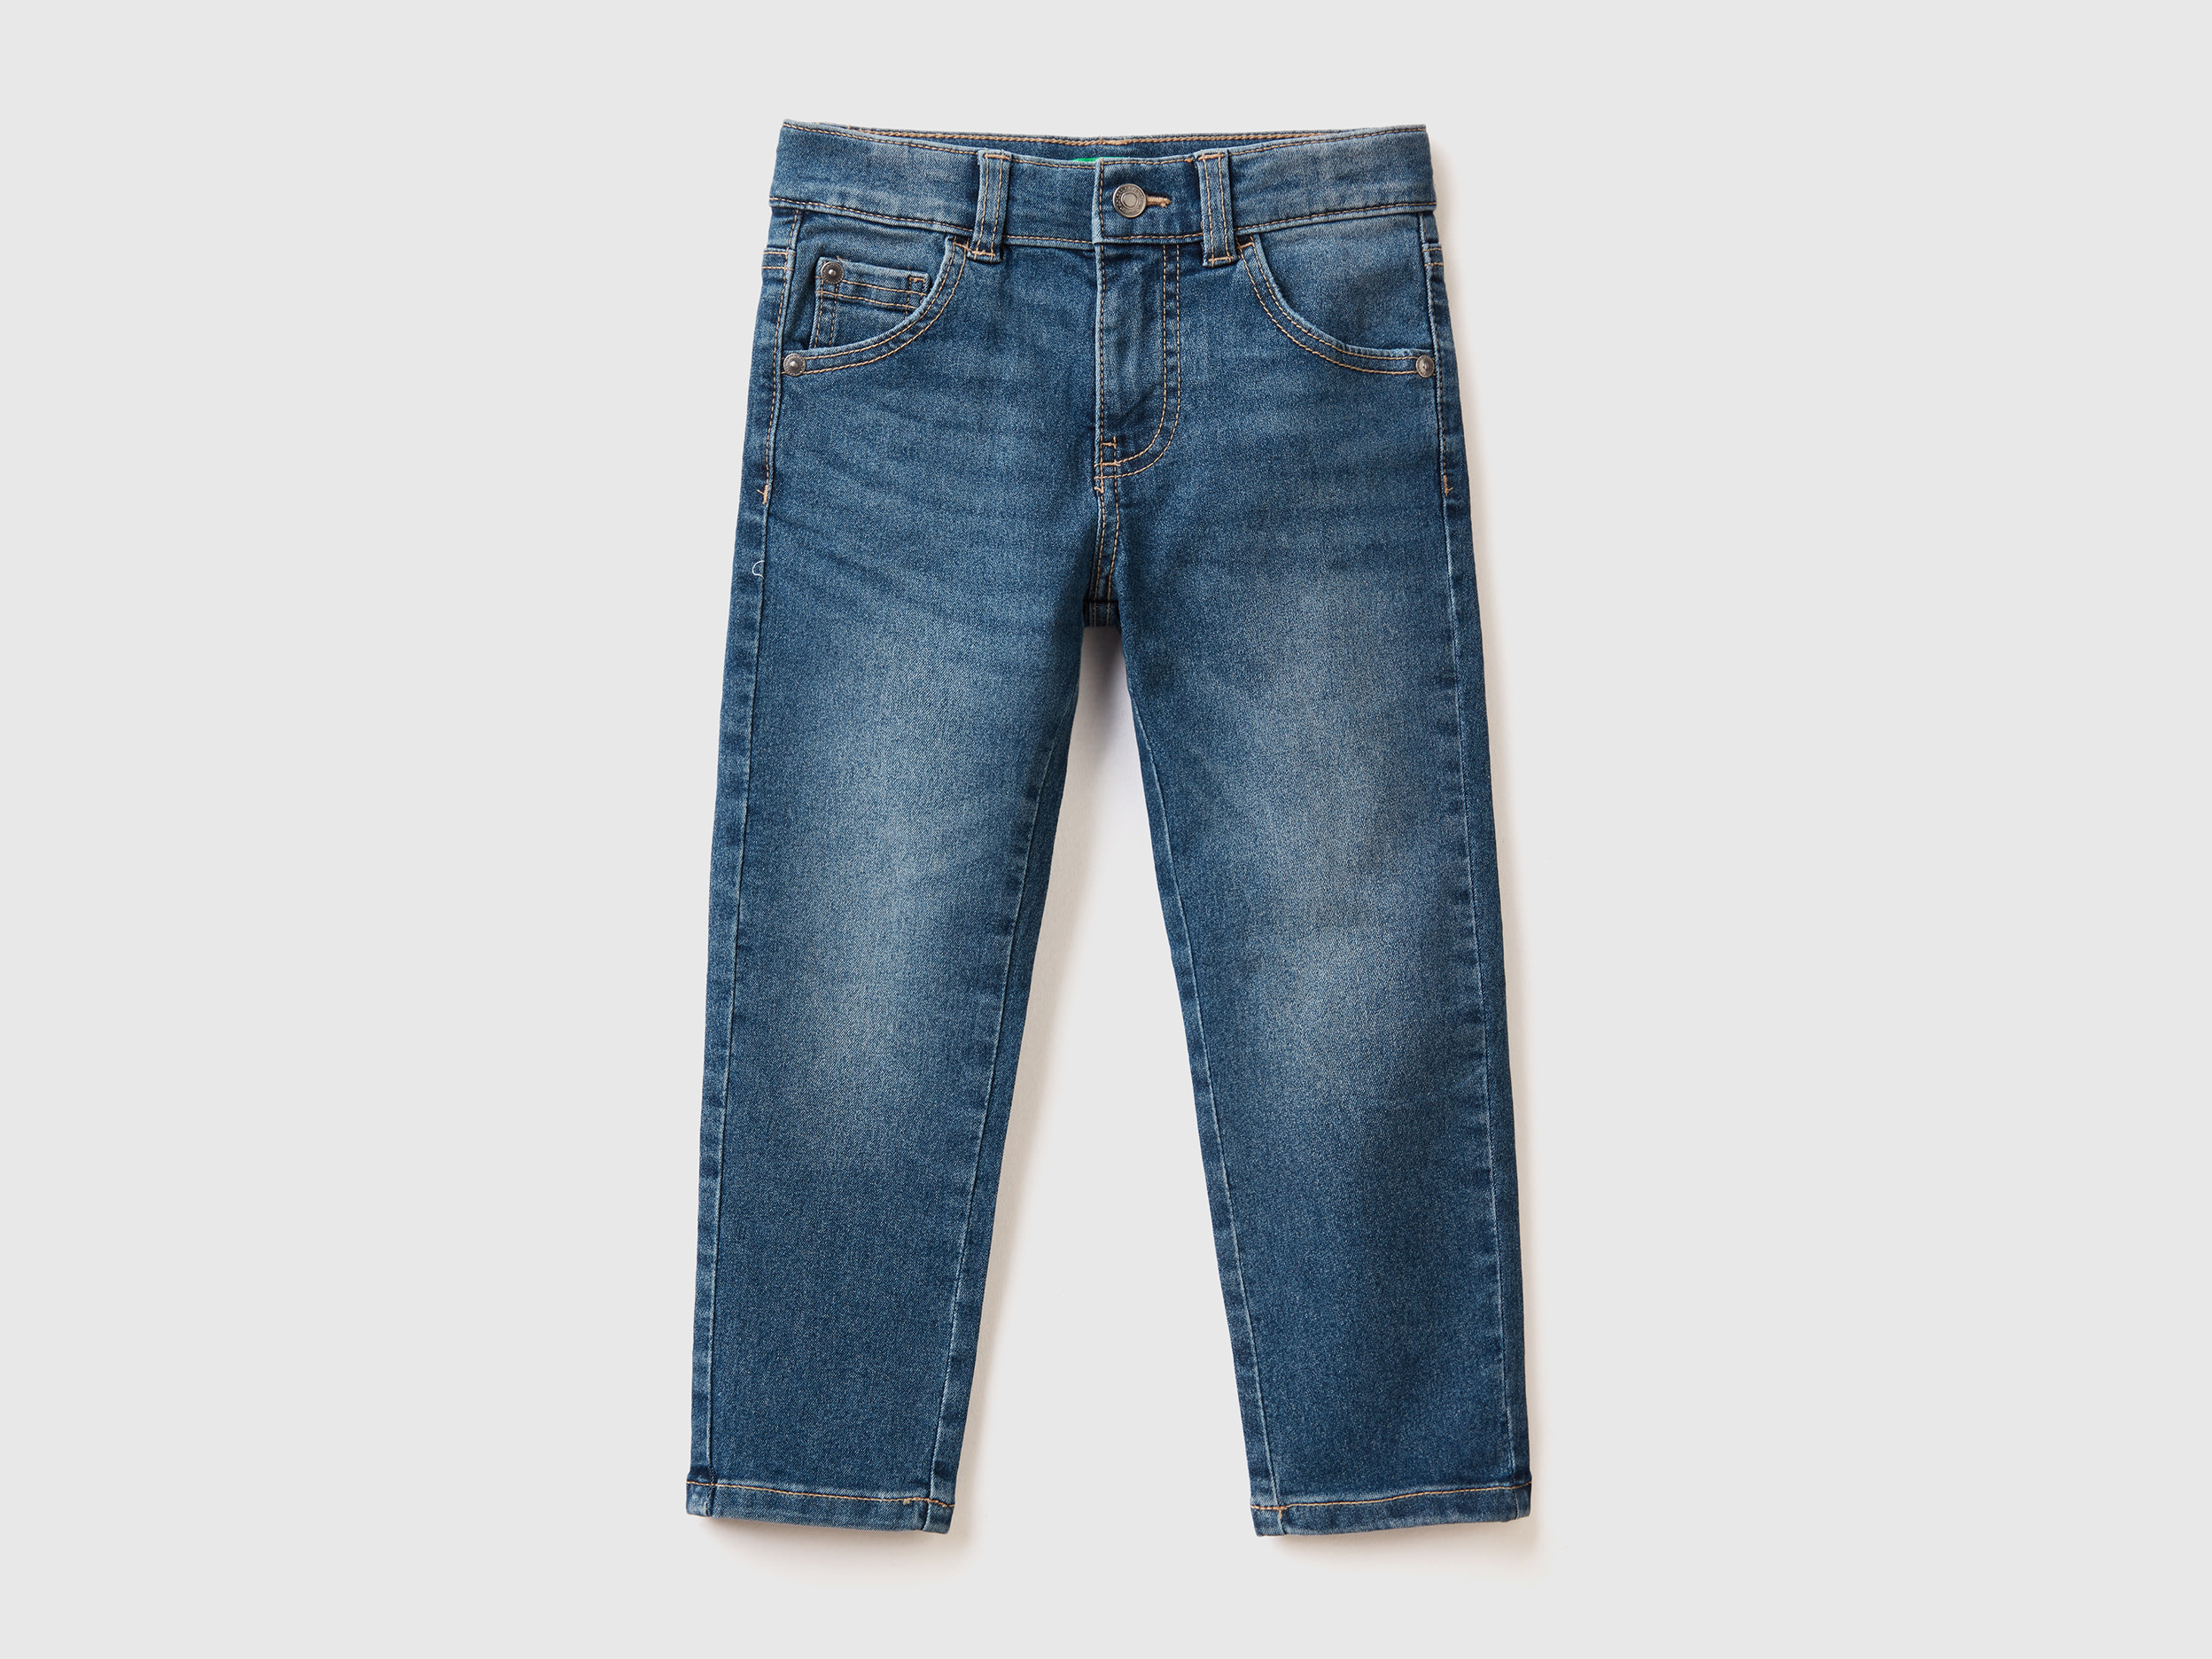 Benetton, Vintage Look Skinny Fit Jeans, size 18-24, Dark Blue, Kids